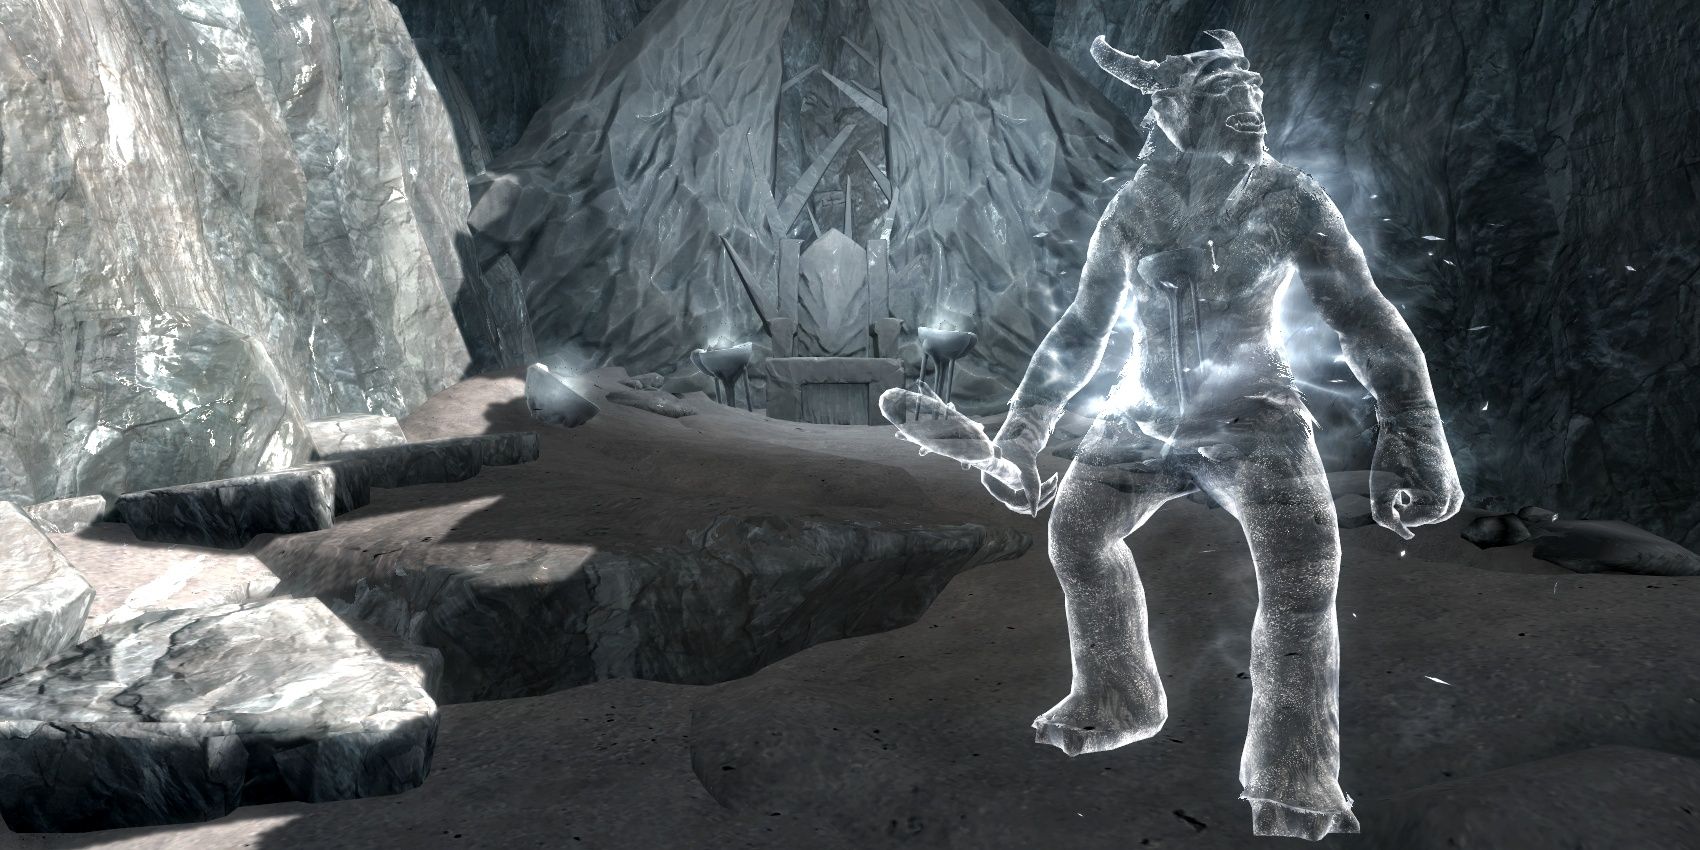 Skyrim Karstaag's spirit and throne in Dragonborn DLC.